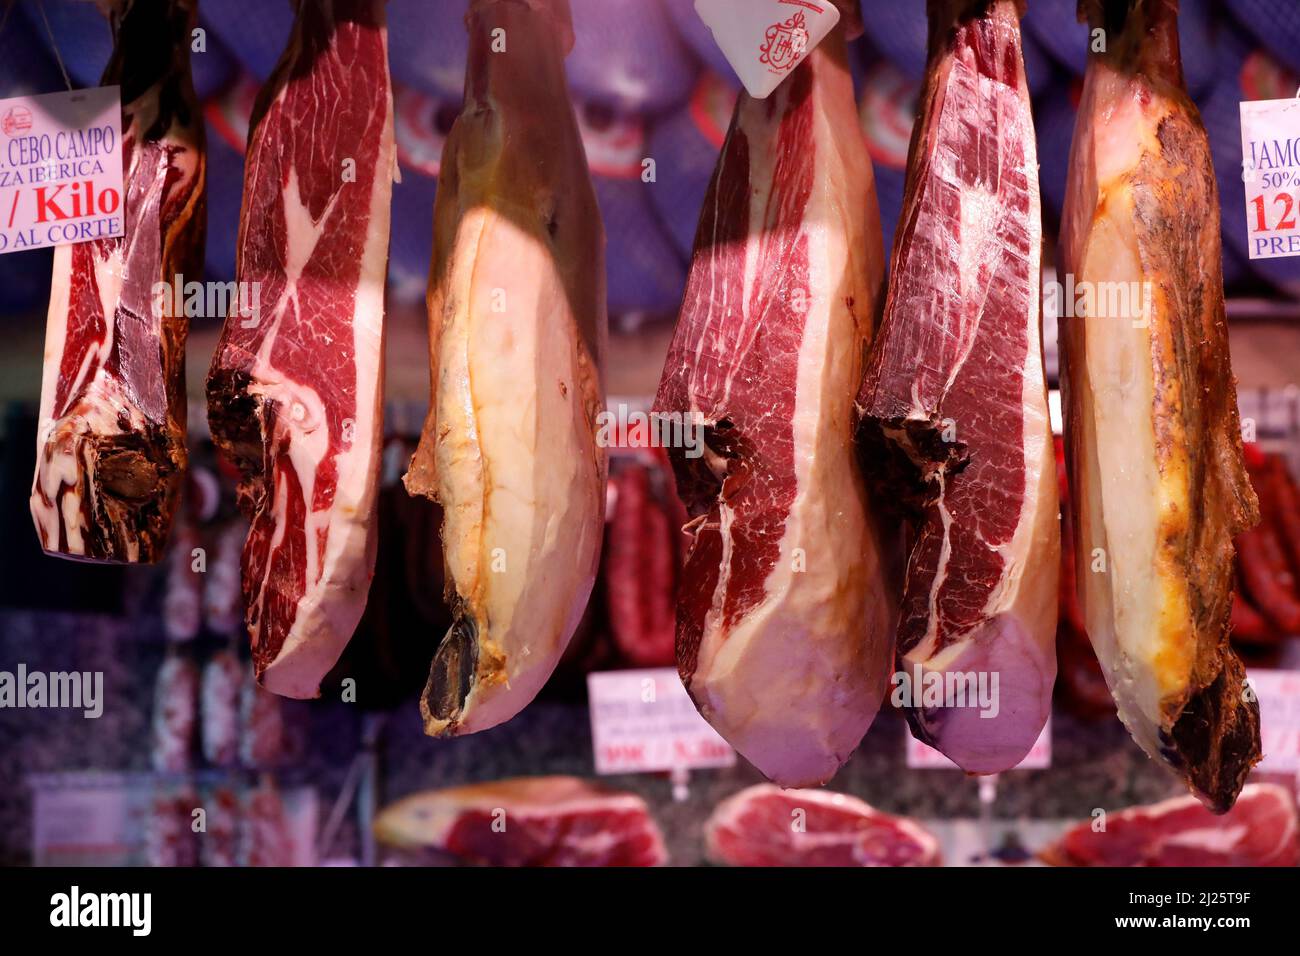 Cured ham or Jamon Iberico hanging at market. Stock Photo